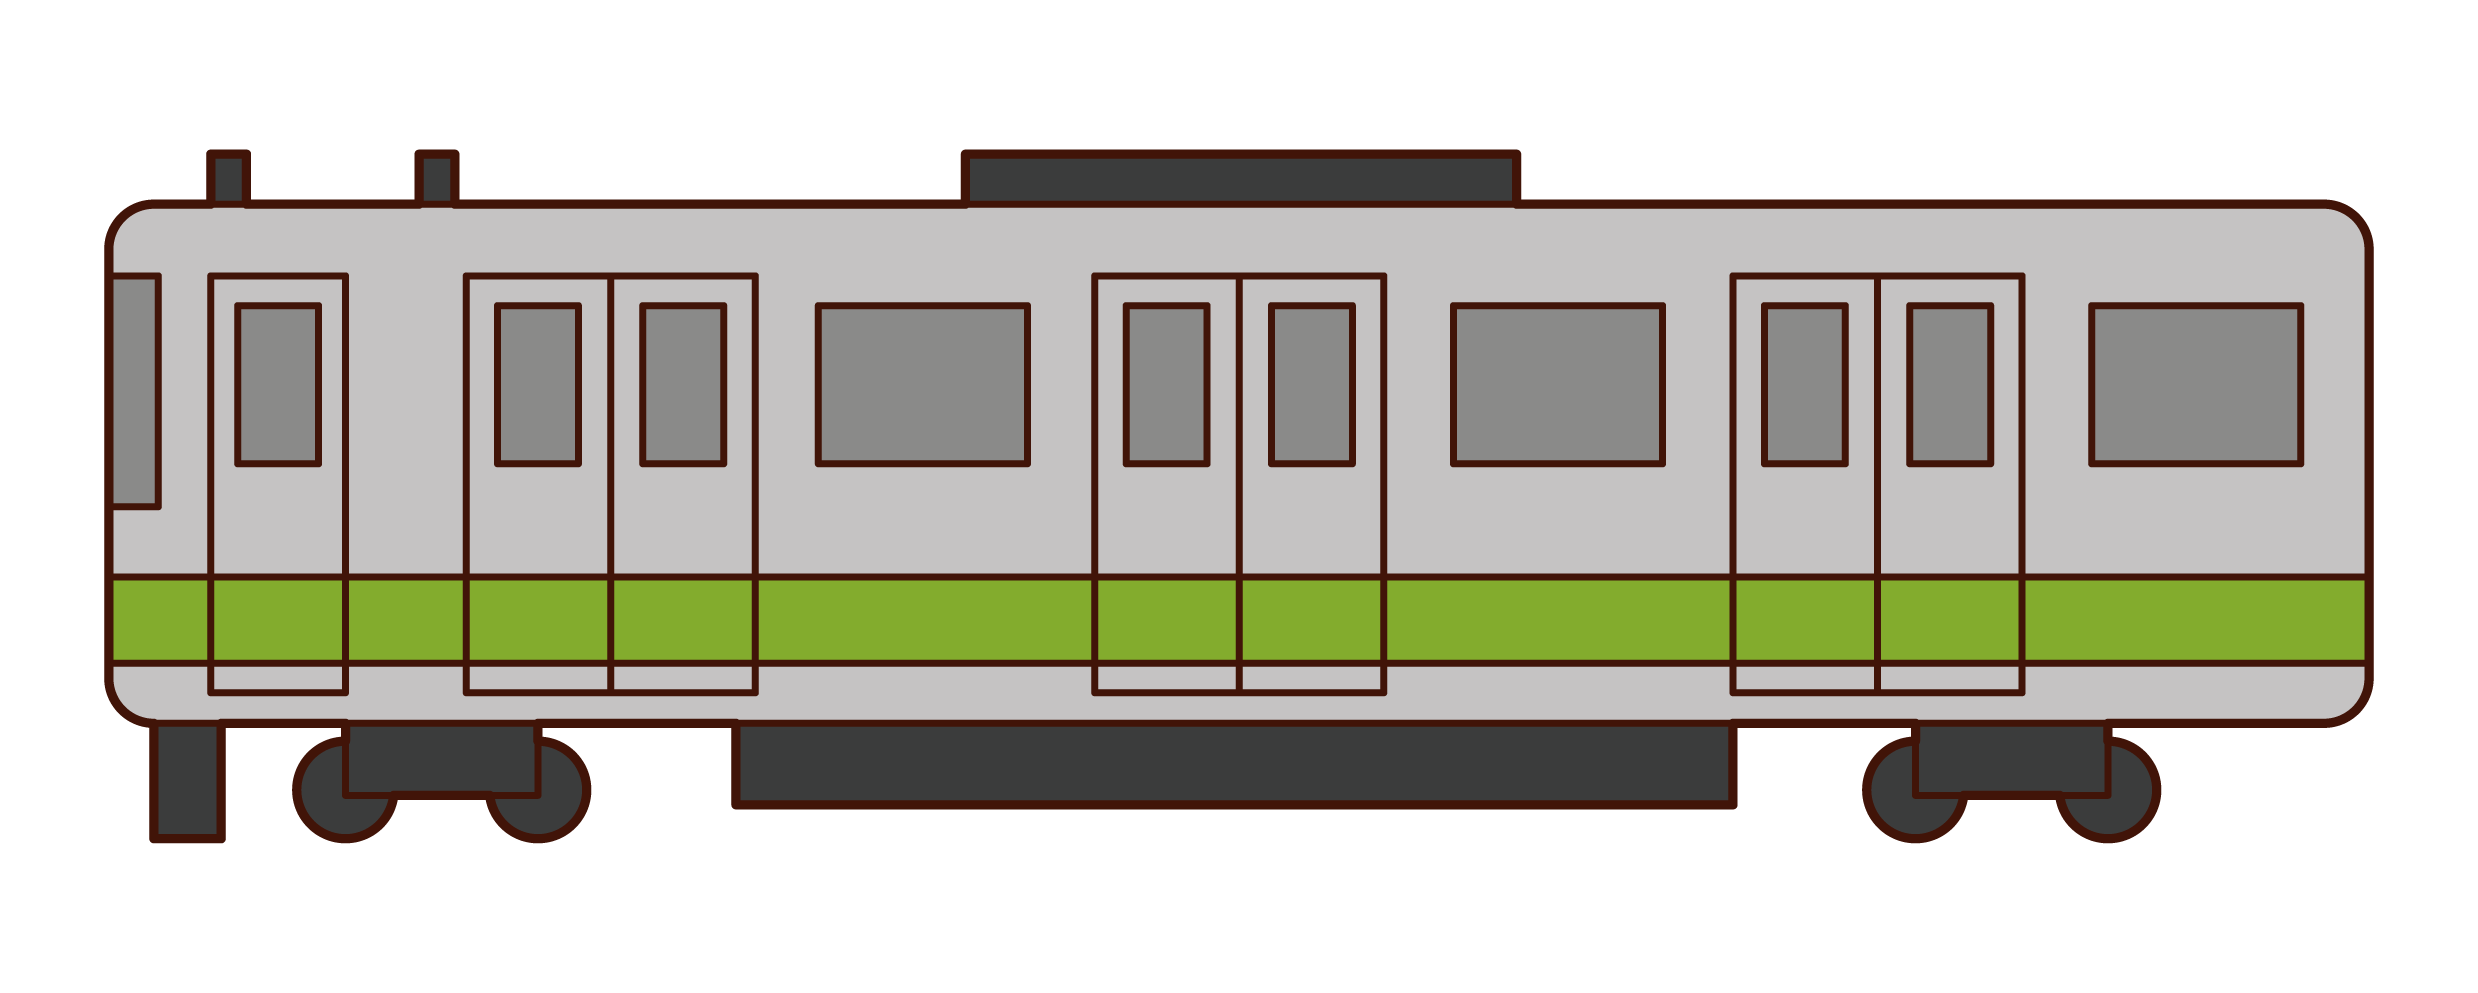 Illustration of the train